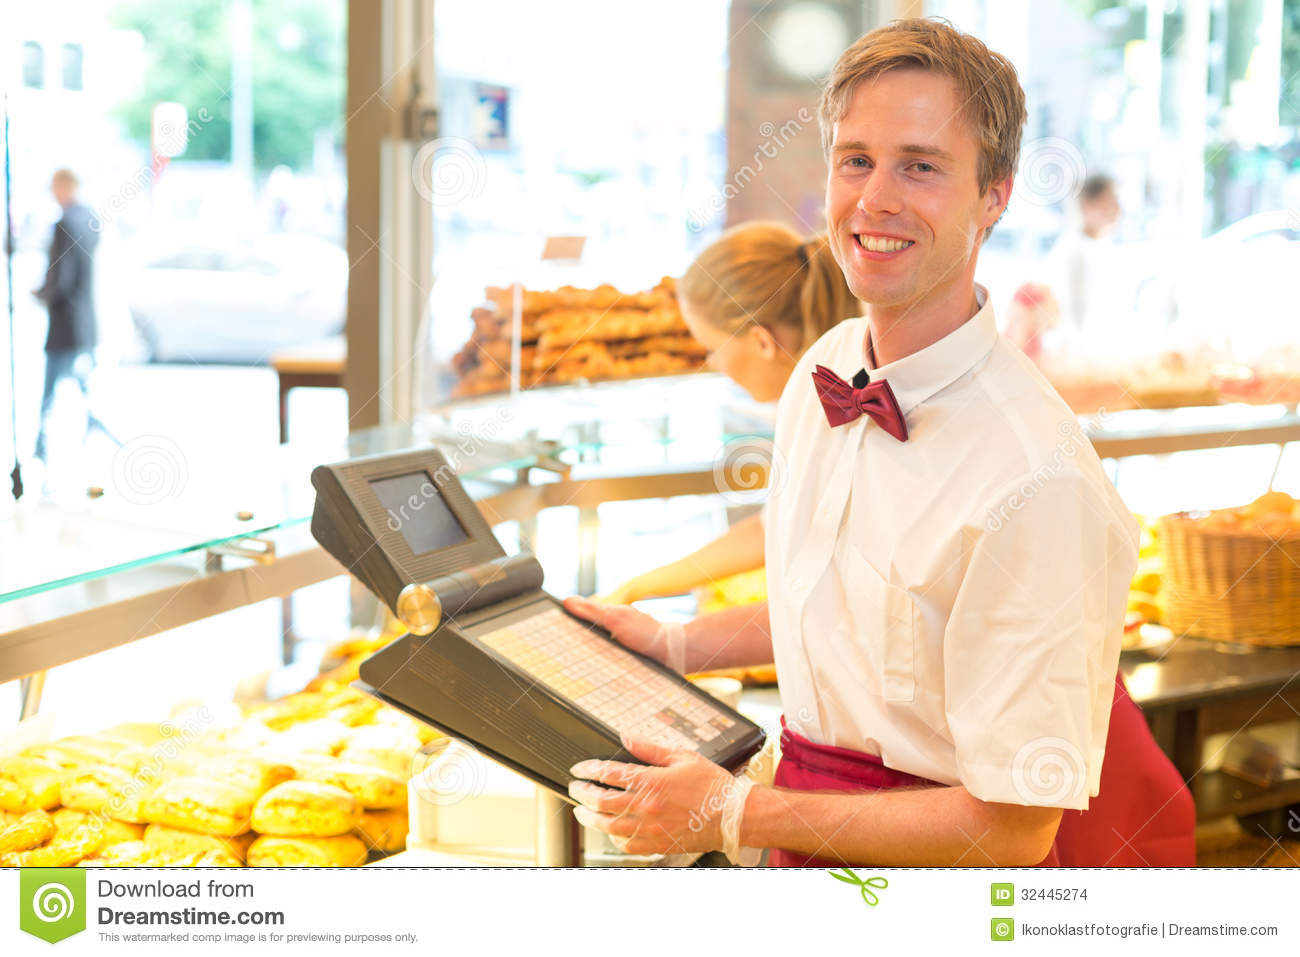 Cashier In Baker S Shop Posing With Cash Register Stock Images   Image